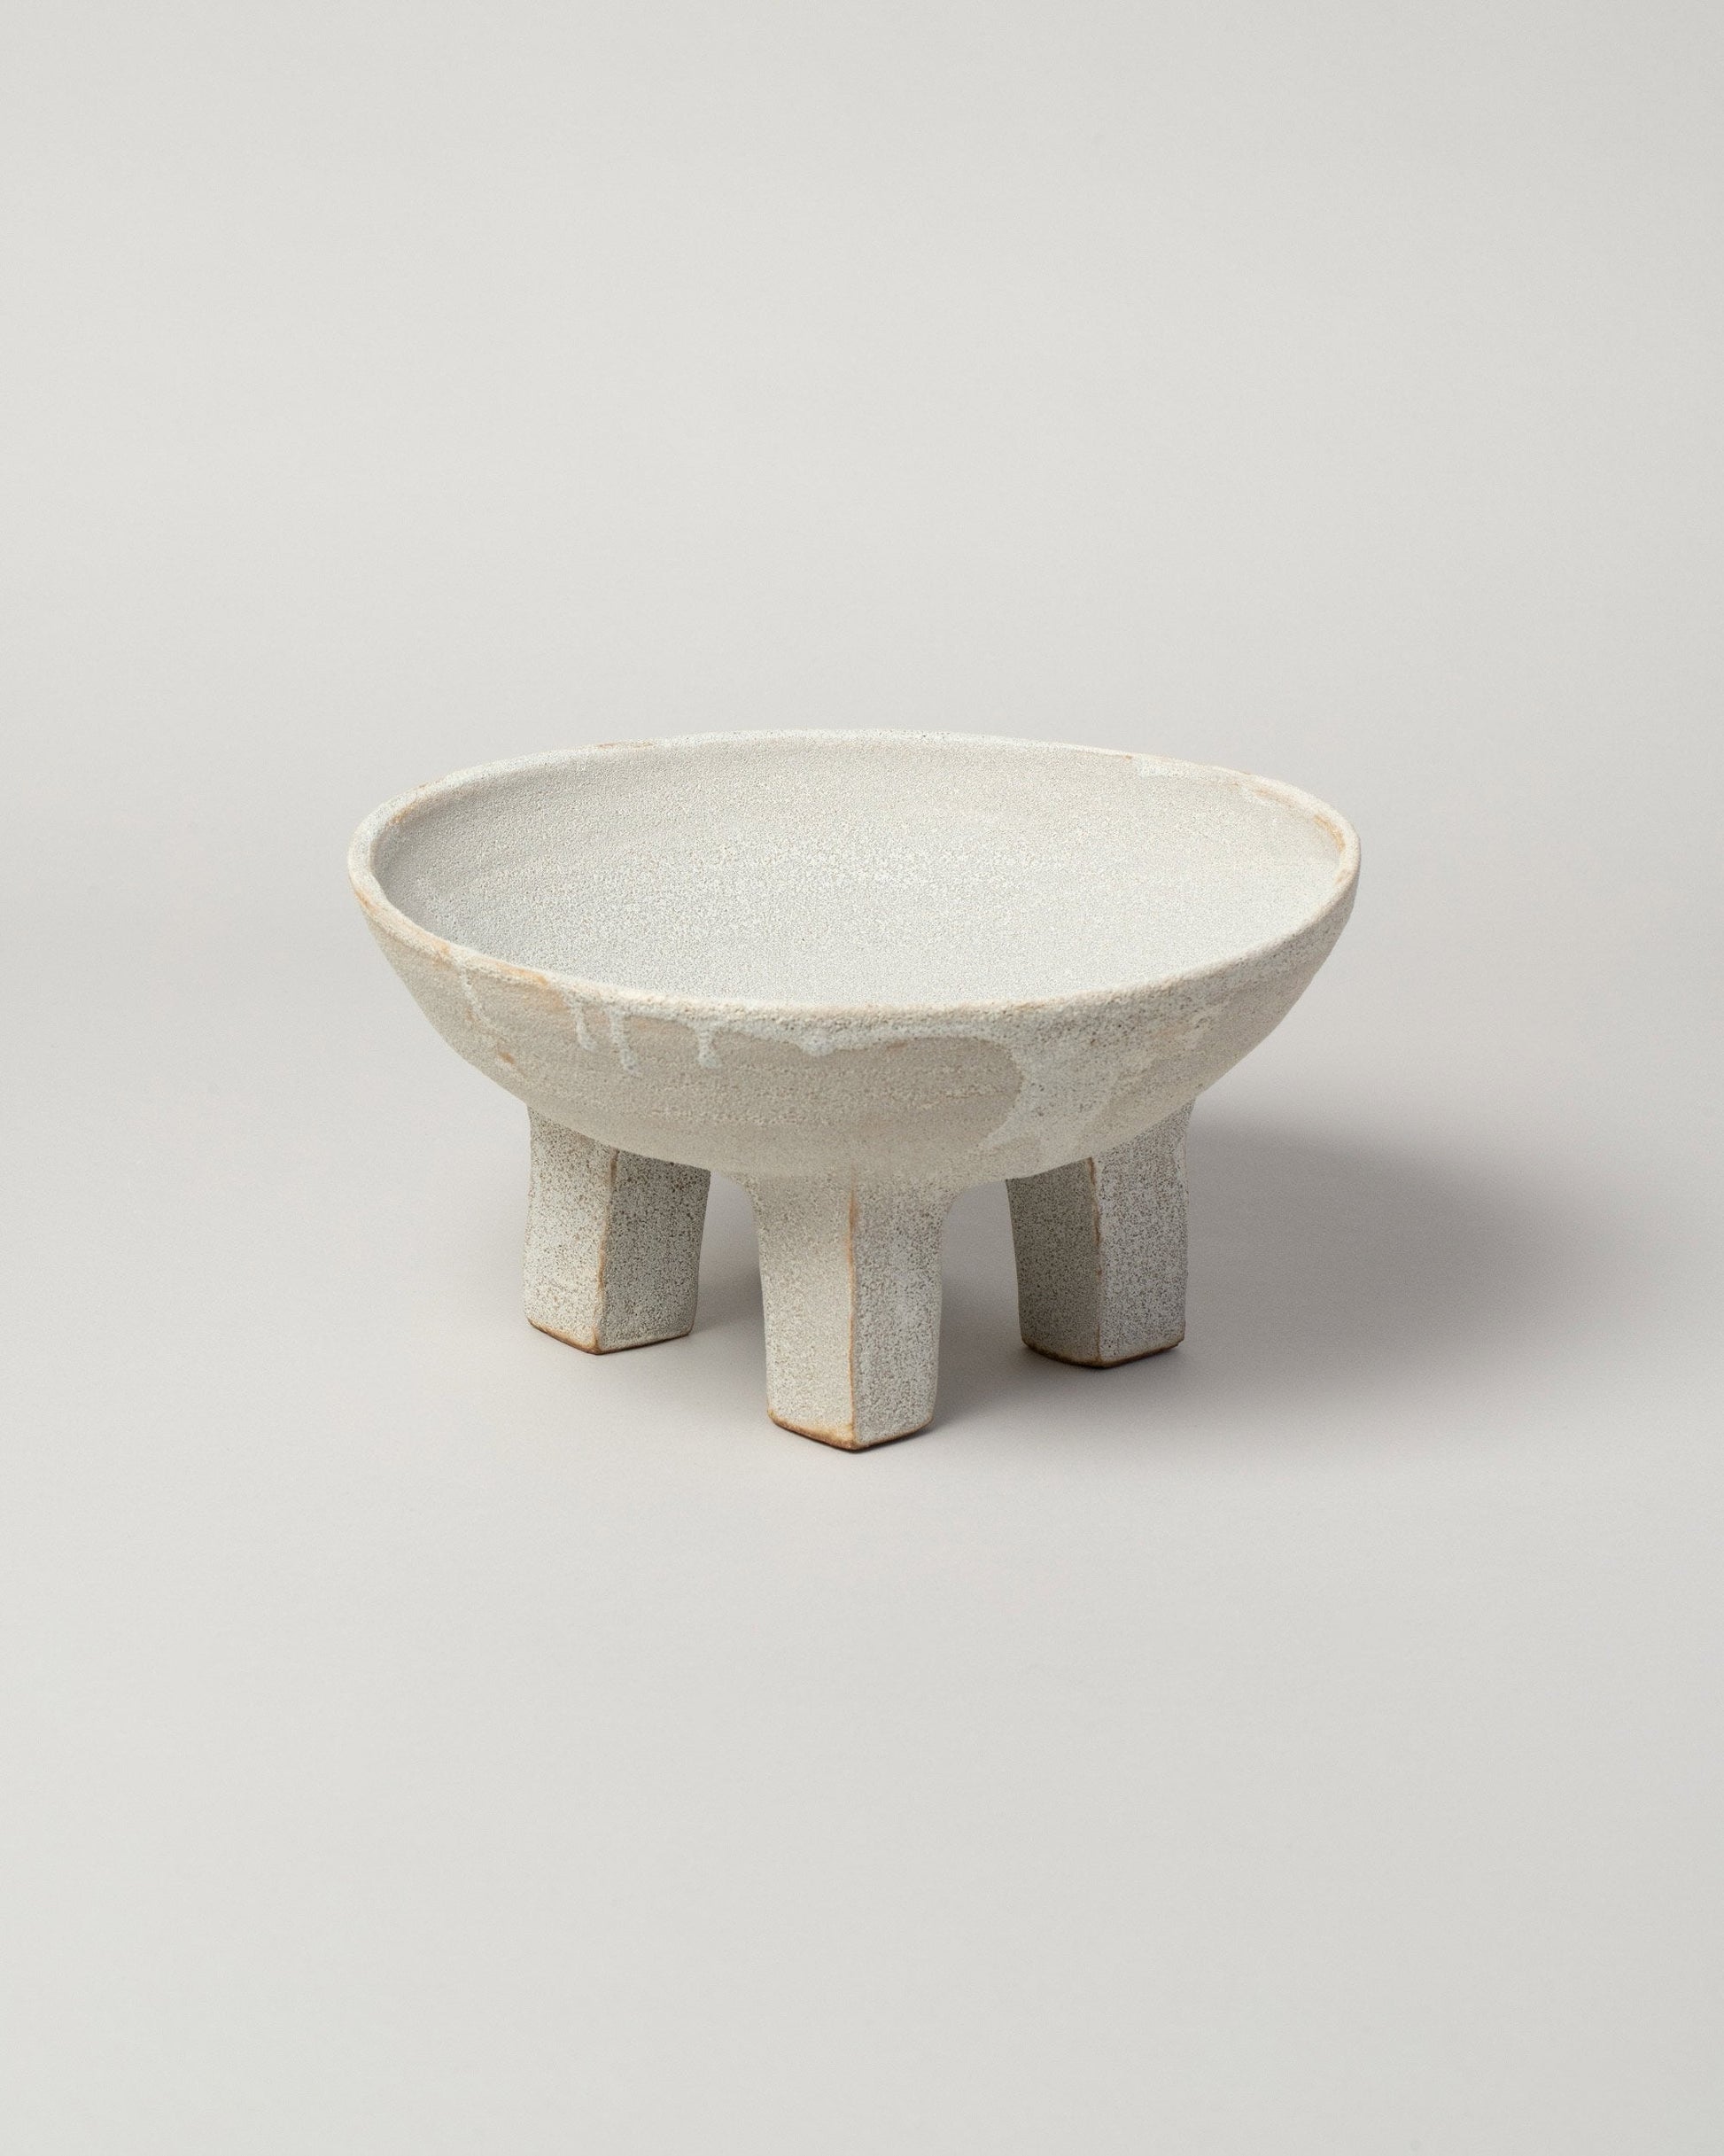  Nur Ceramics Volcanic White Ritual Bowl on light color background.